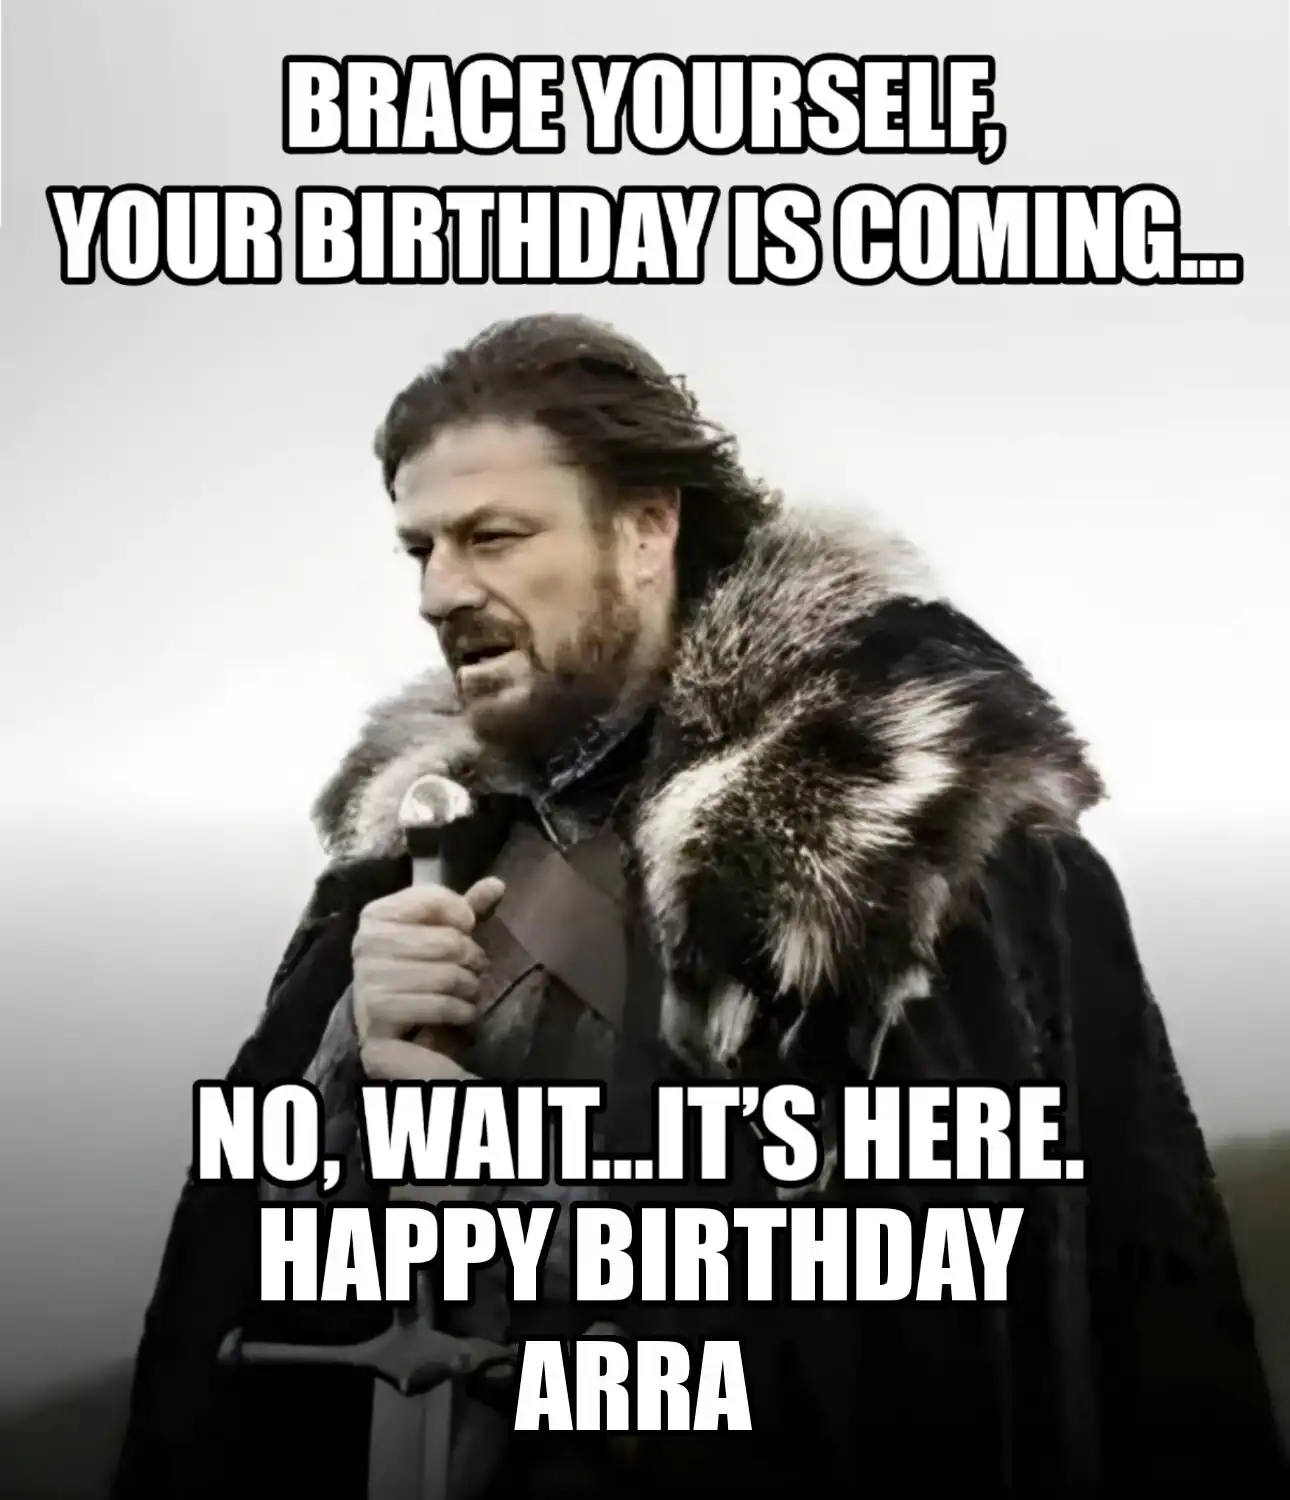 Happy Birthday Arra Brace Yourself Your Birthday Is Coming Meme